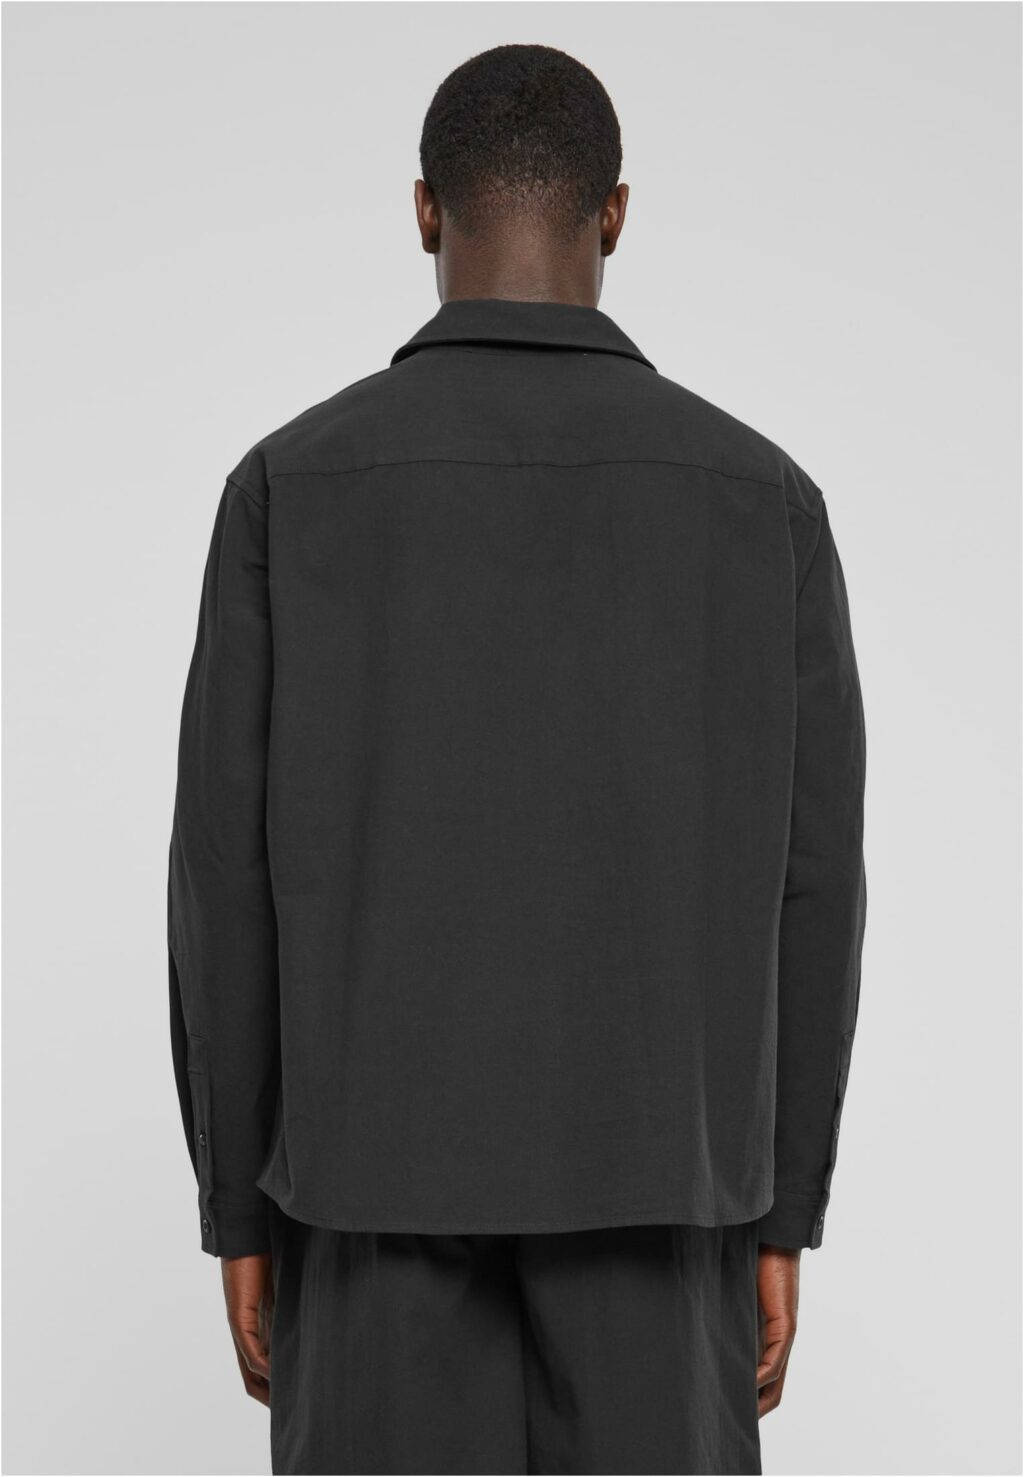 Urban Classics Basic Crepe Shirt black TB6410